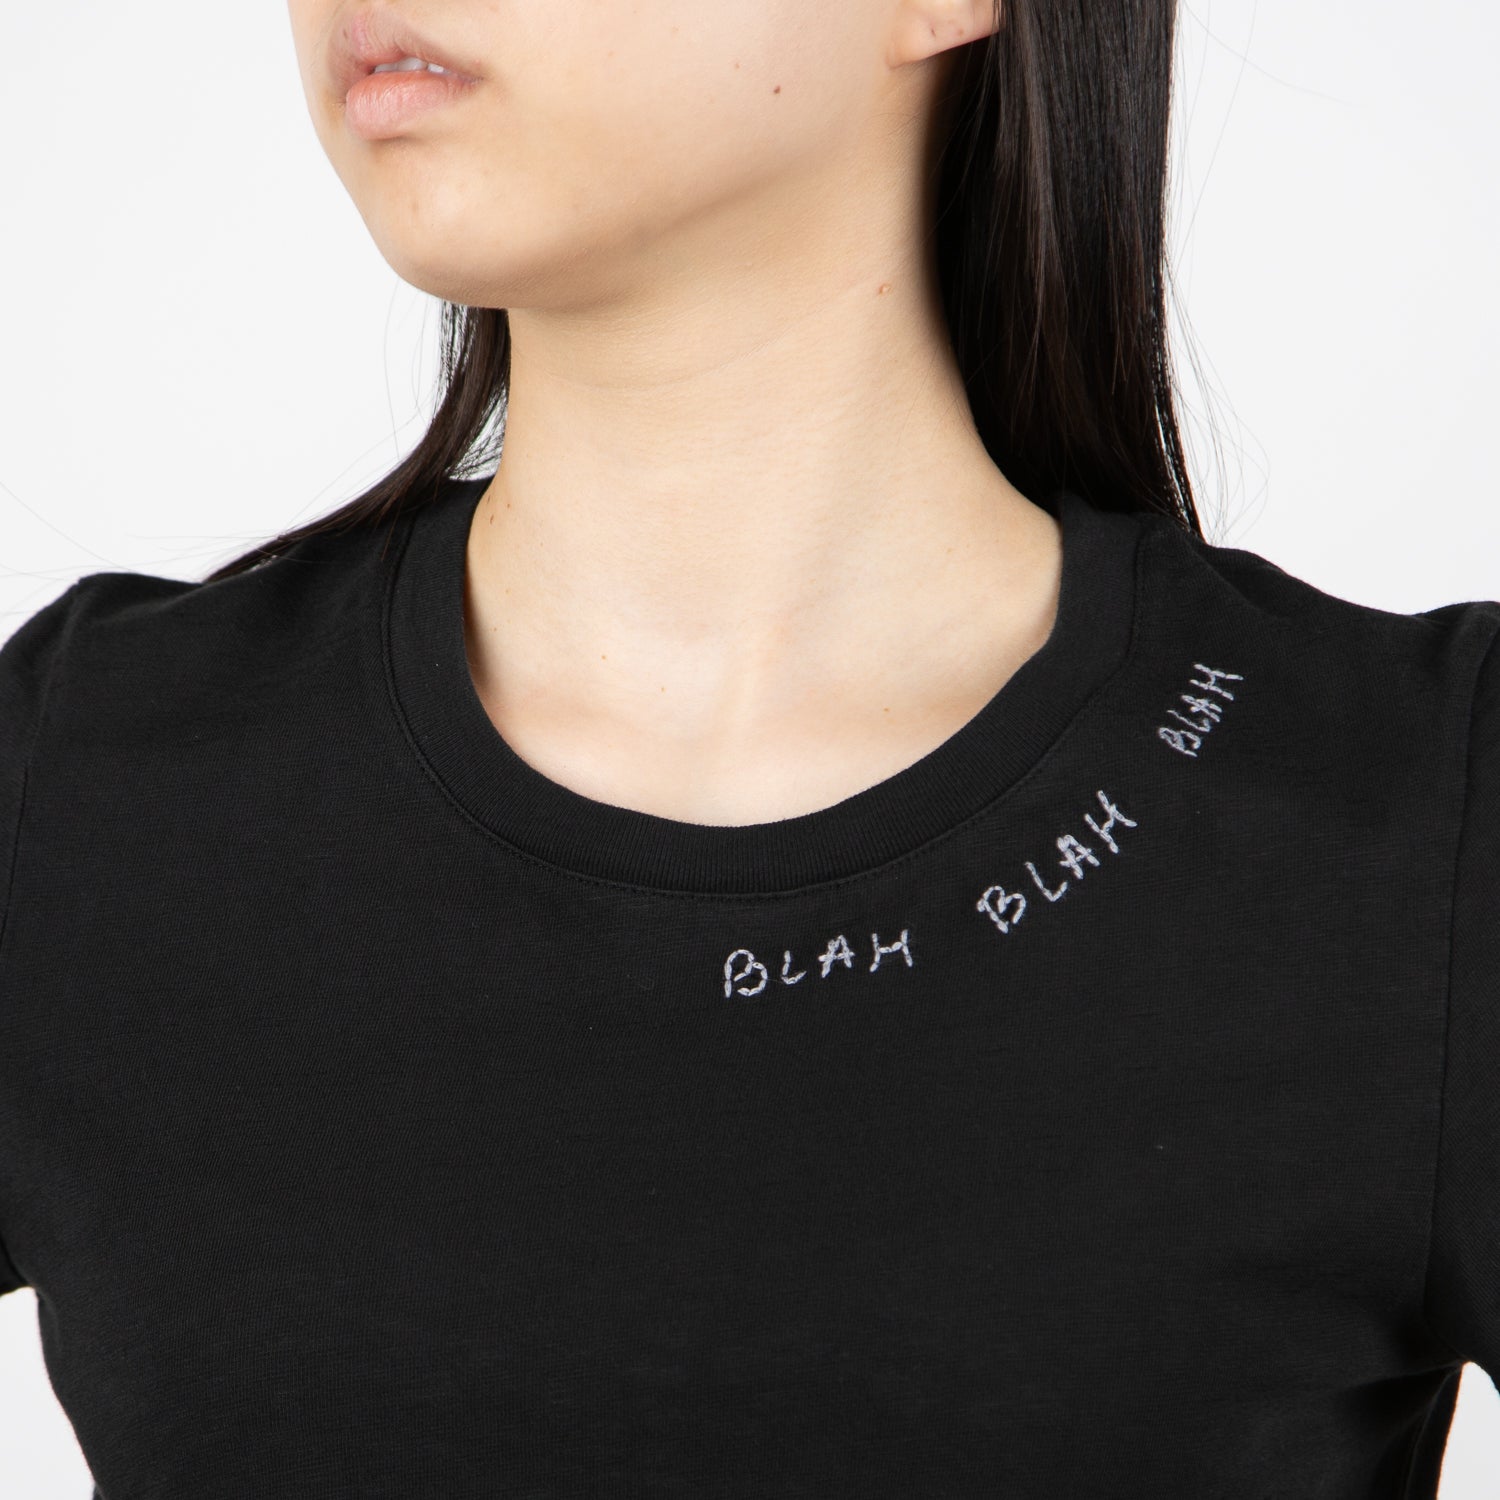 "Blah Blah Blah" T-shirt, black - Secret Location